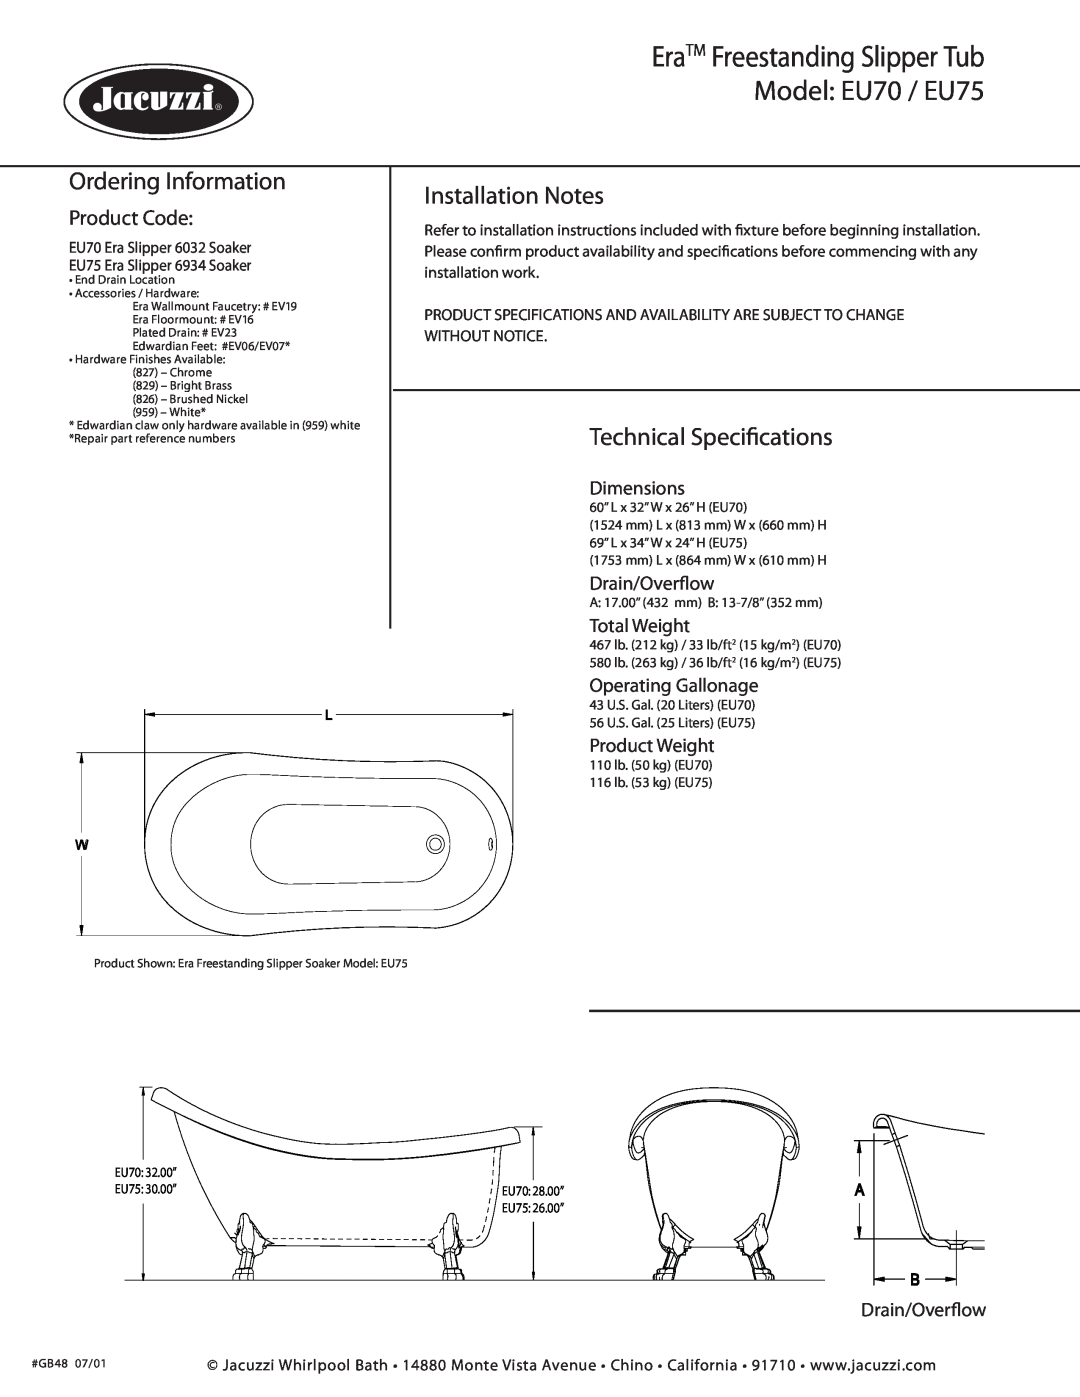 Jacuzzi EV23 EraTM Freestanding Slipper Tub, Model EU70 / EU75, Ordering Information, Installation Notes, Product Code 